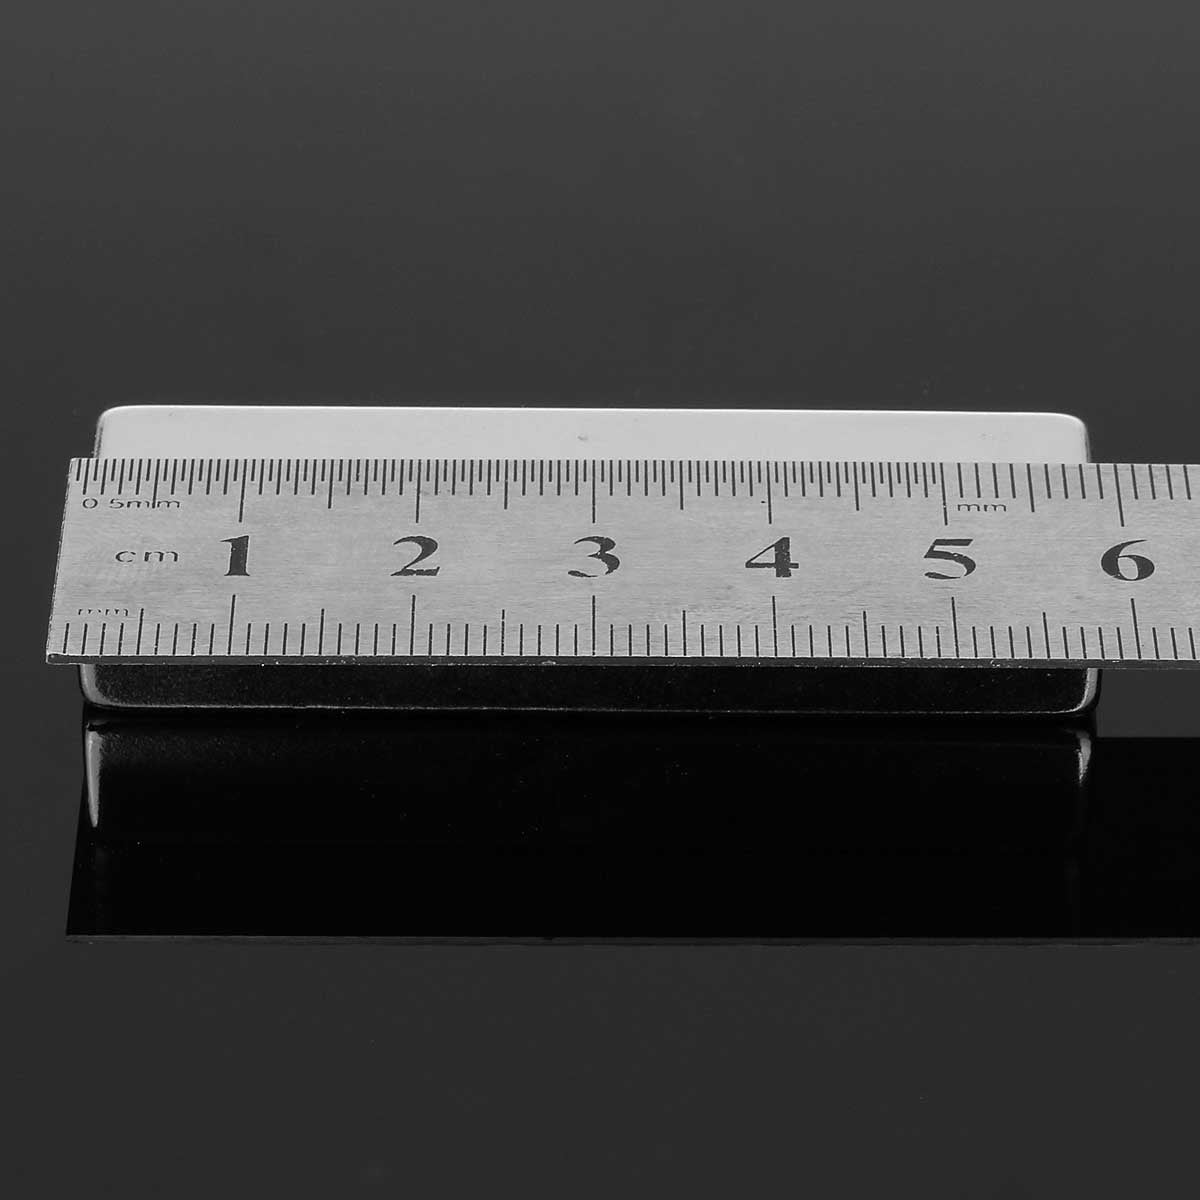 N52 Grade Block Super Strong 60x20x10mm Neodymium Permanent Rare Earth Magnet 